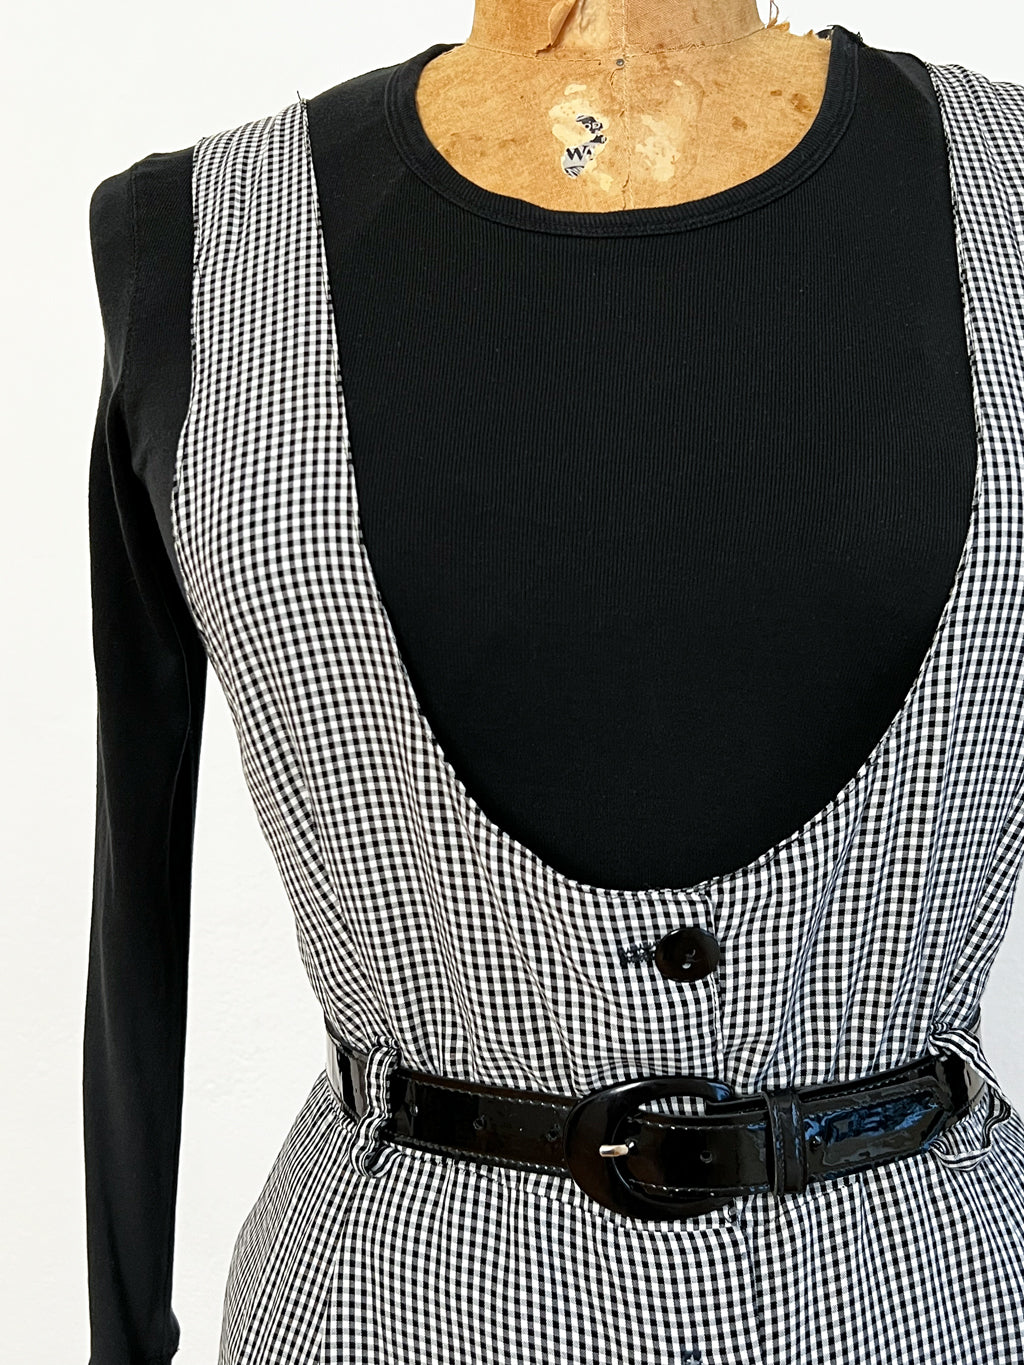 Vintage 1970s Does 1940s Jumper Dress - VOLUP & Versatile Sharp Black White Gingham Plaid Rayon w Matching Wide Belt Size L - XL